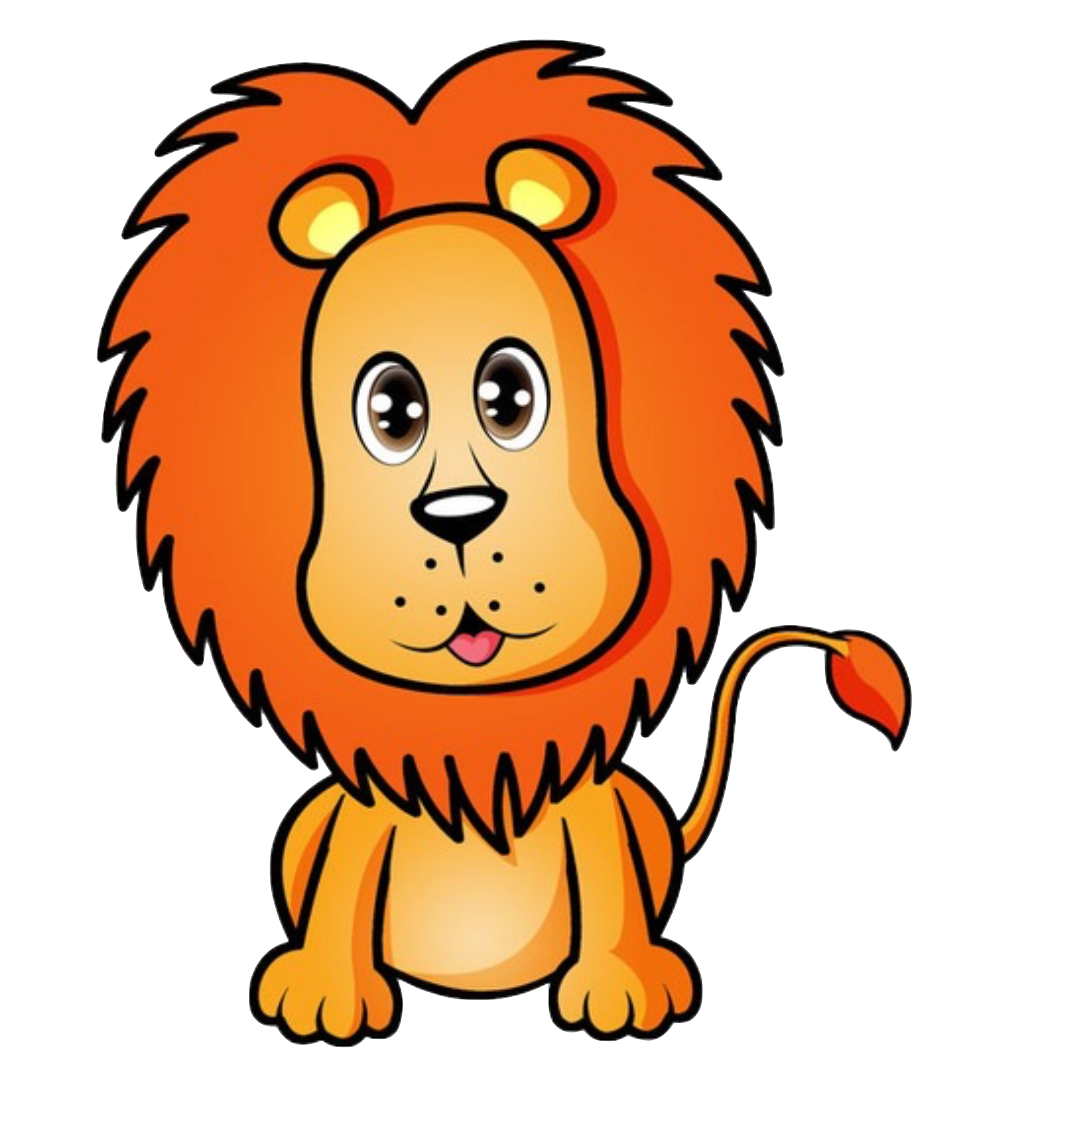 Lion cartoon image cute baby lion